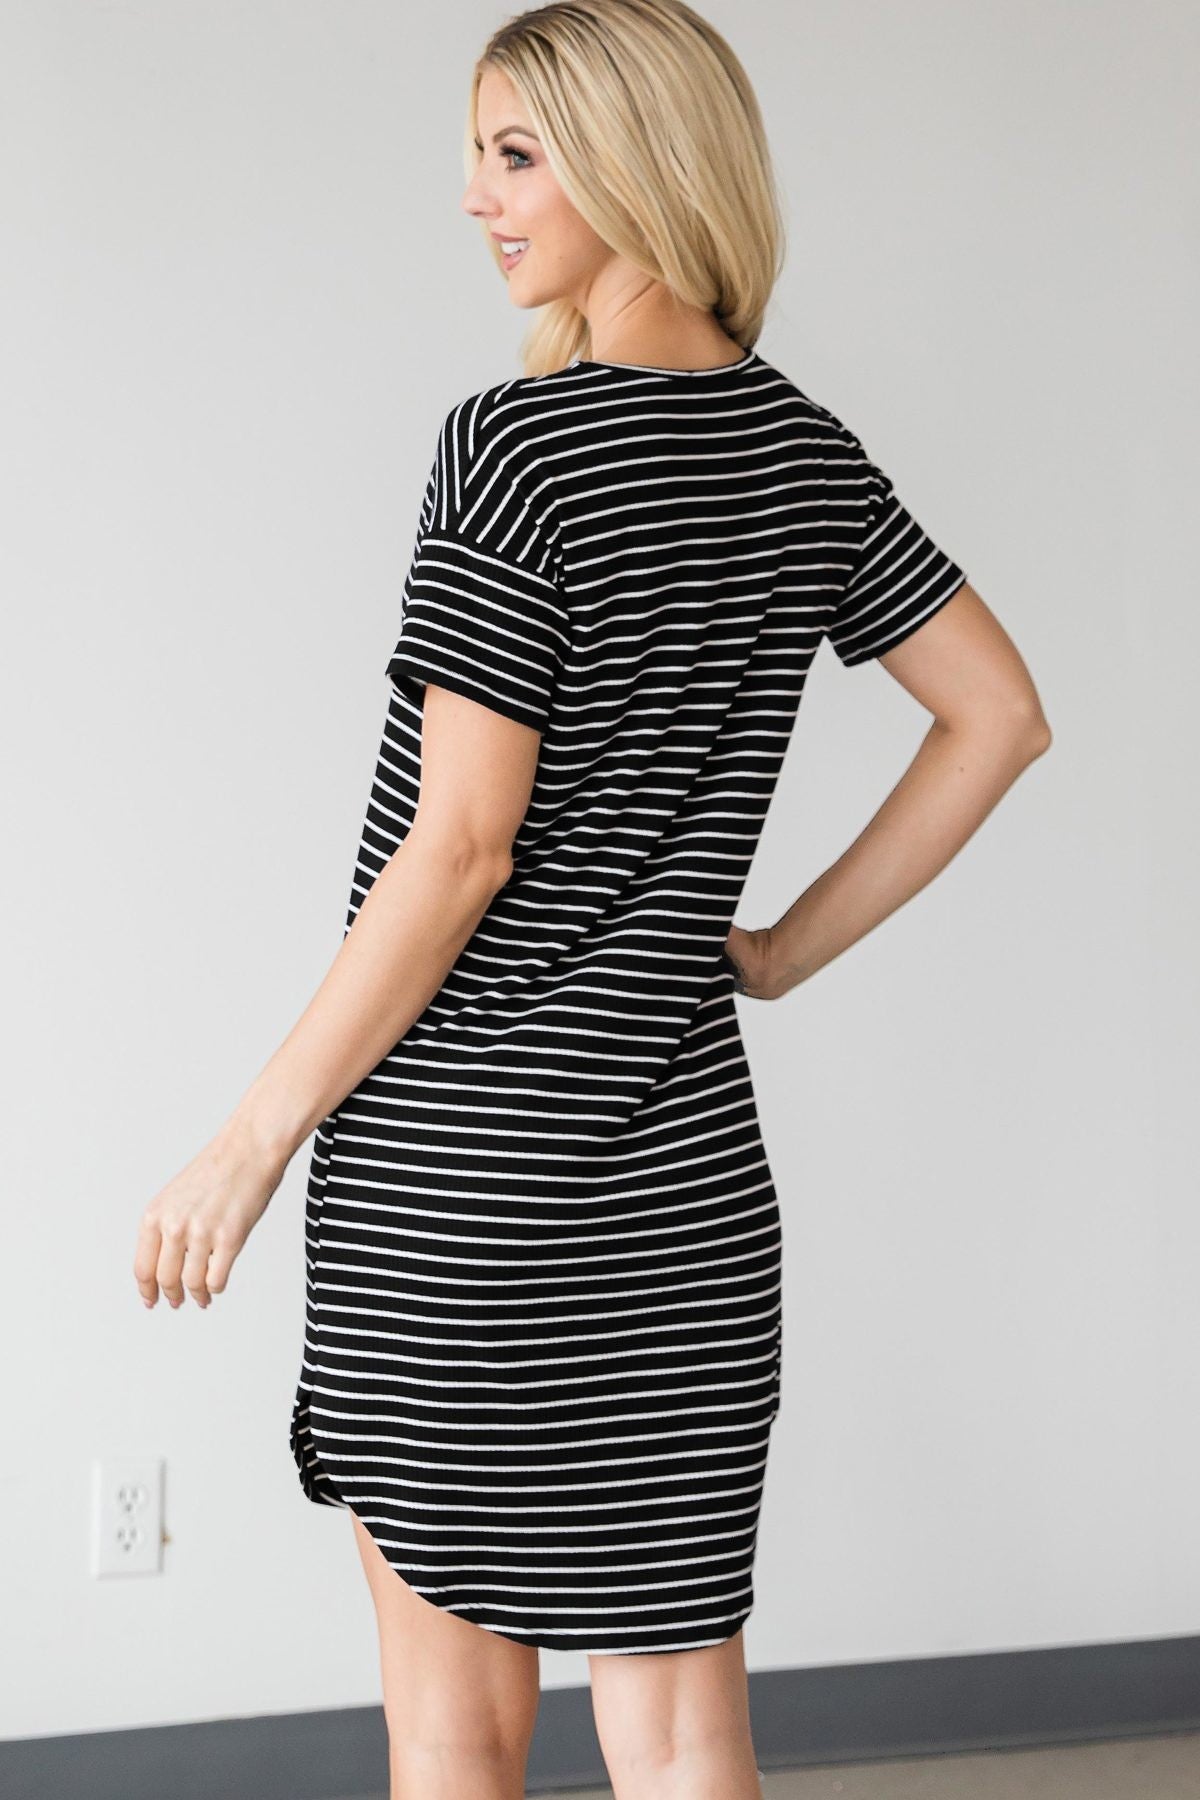 Adorable Striped Mini Dress